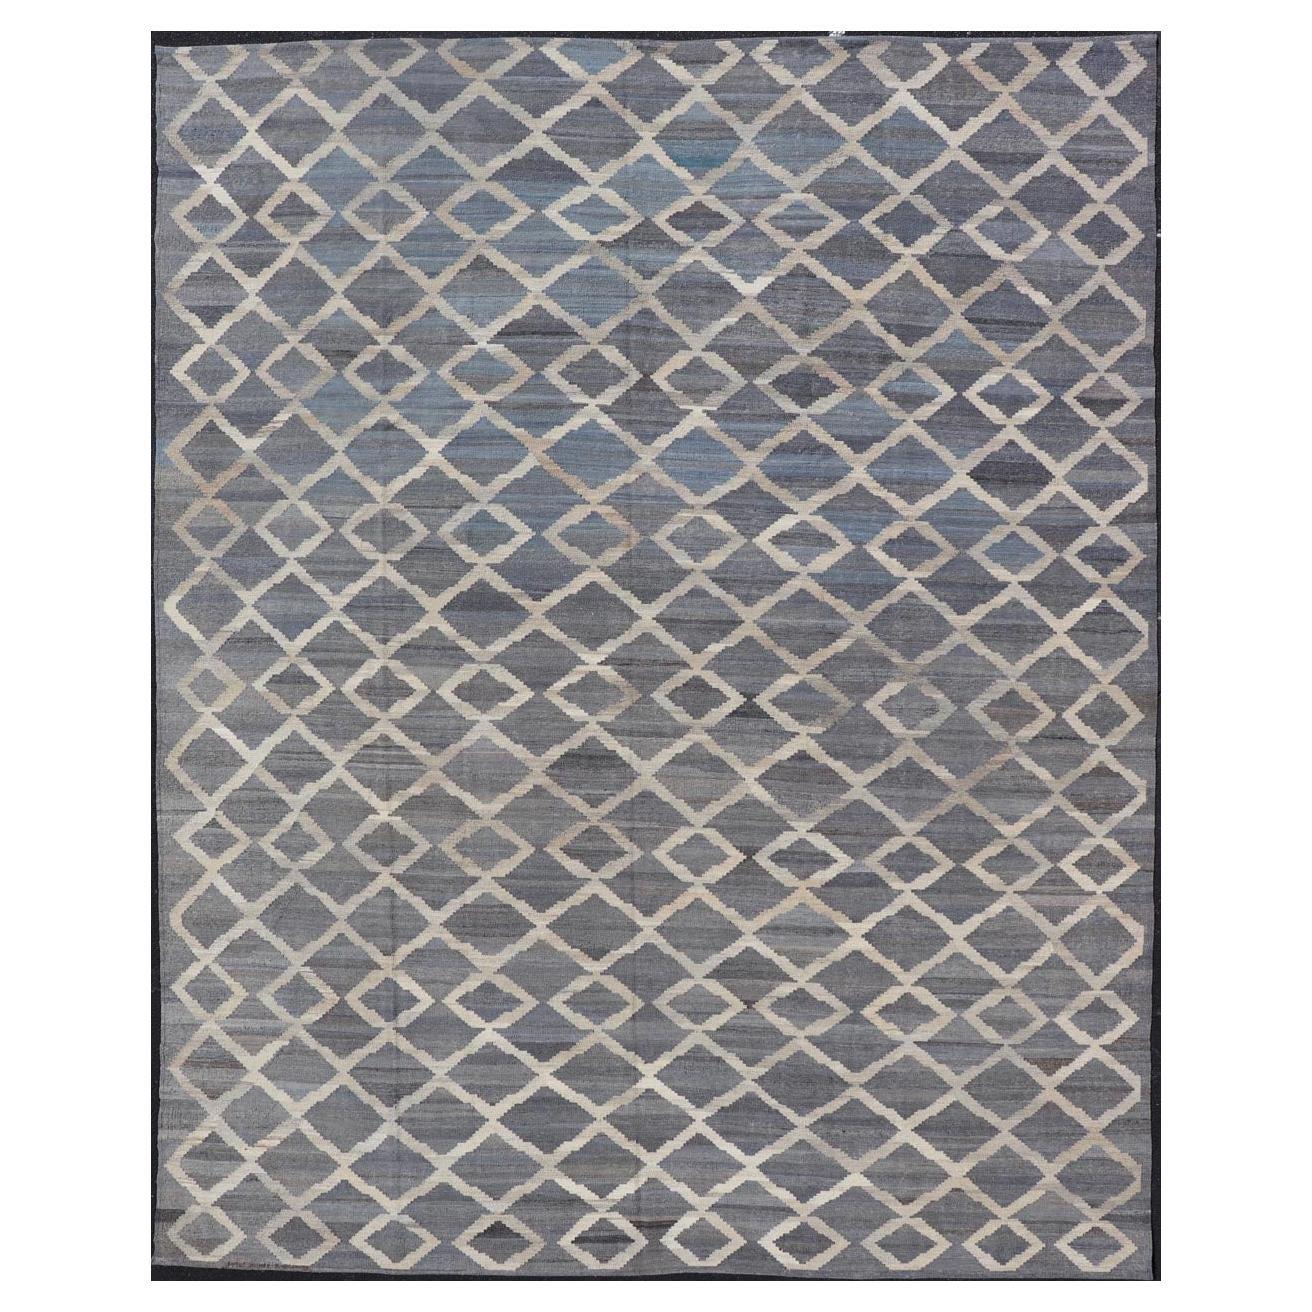 Modern Hand-Woven Kilim in Wool with Sub-Geometric Interlocked Diamond Design